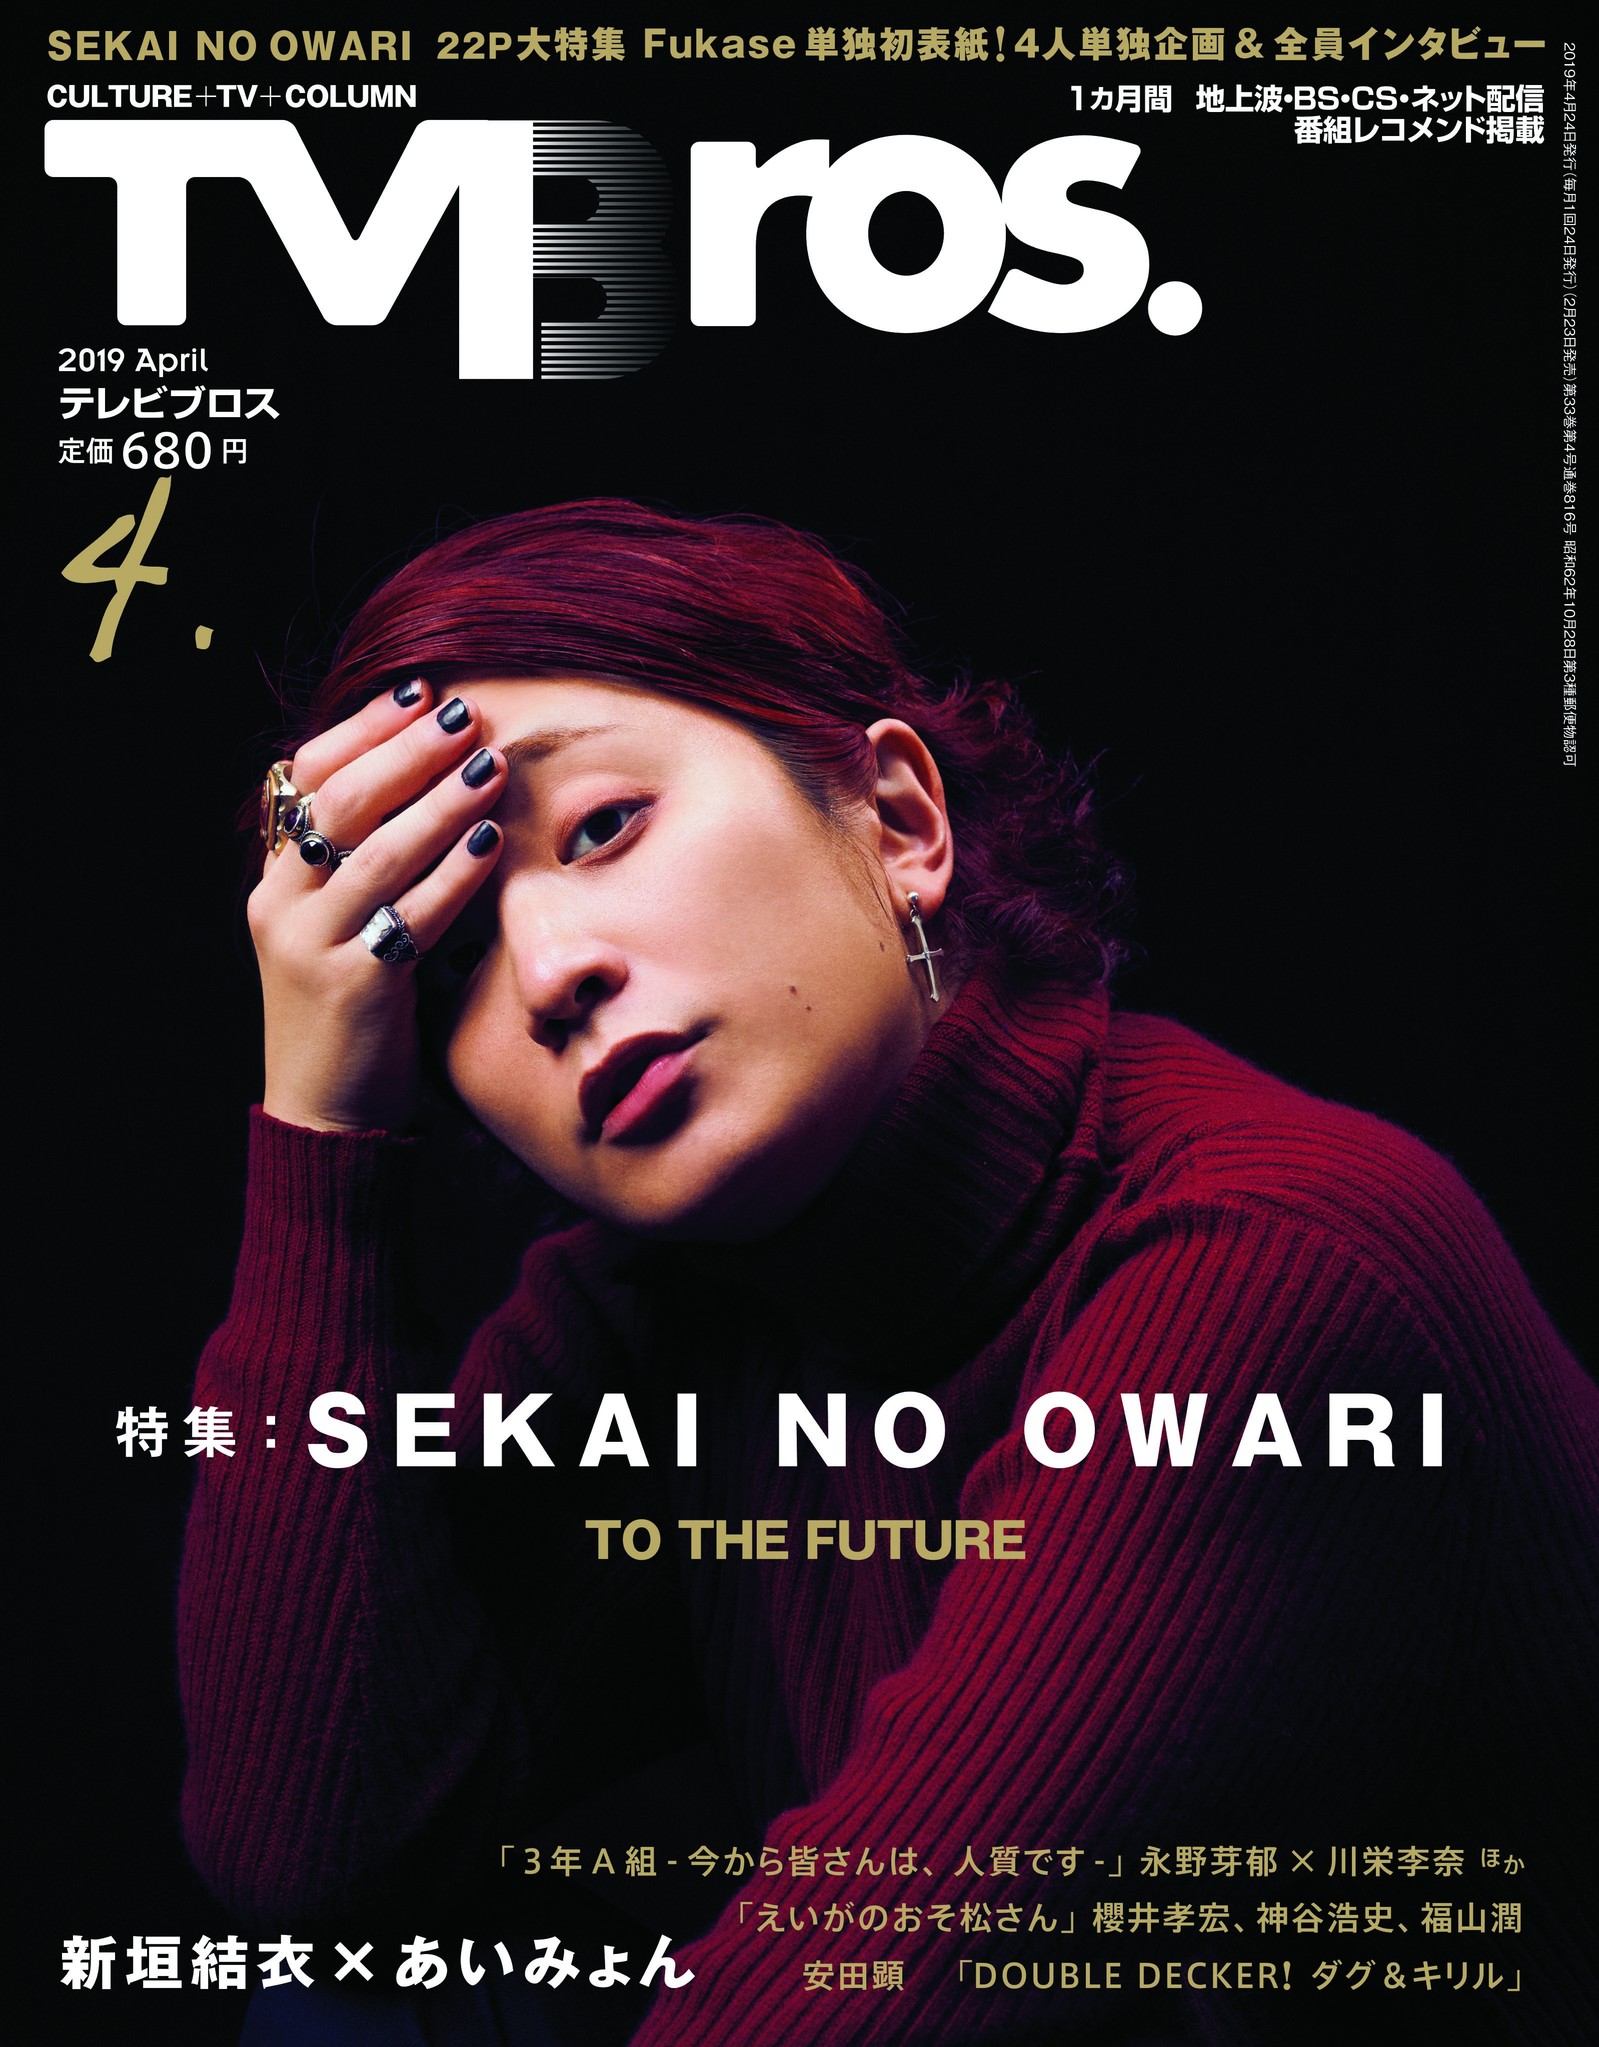 Fukaseが単独初表紙 Tv Bros 4月号はsekai No Owari 全22ページの大特集 株式会社東京ニュース通信社のプレスリリース